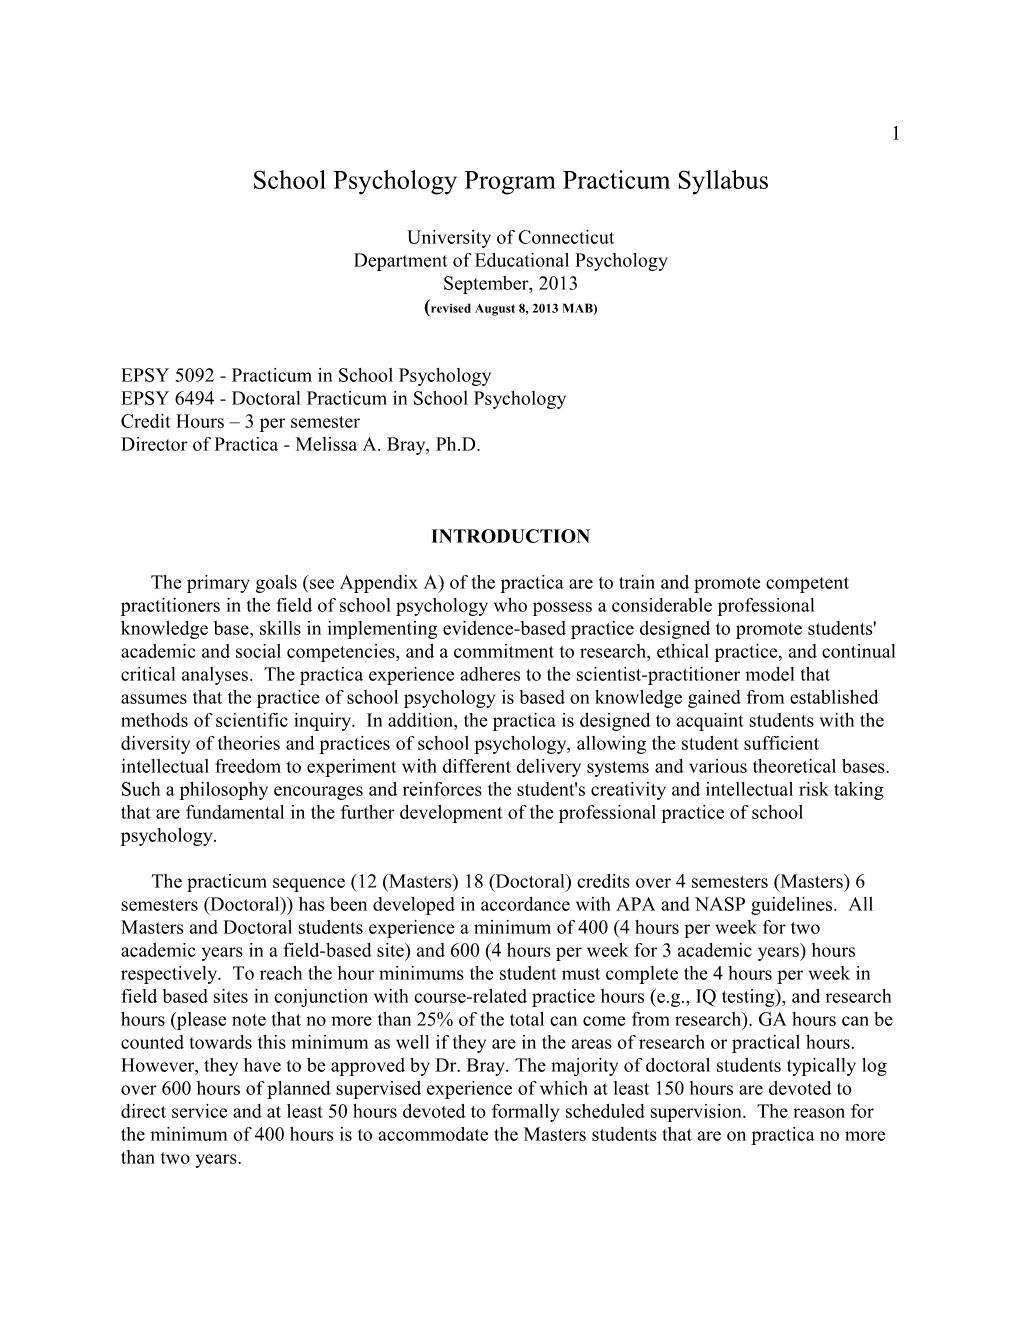 School Psychology Program Practicum Syllabus